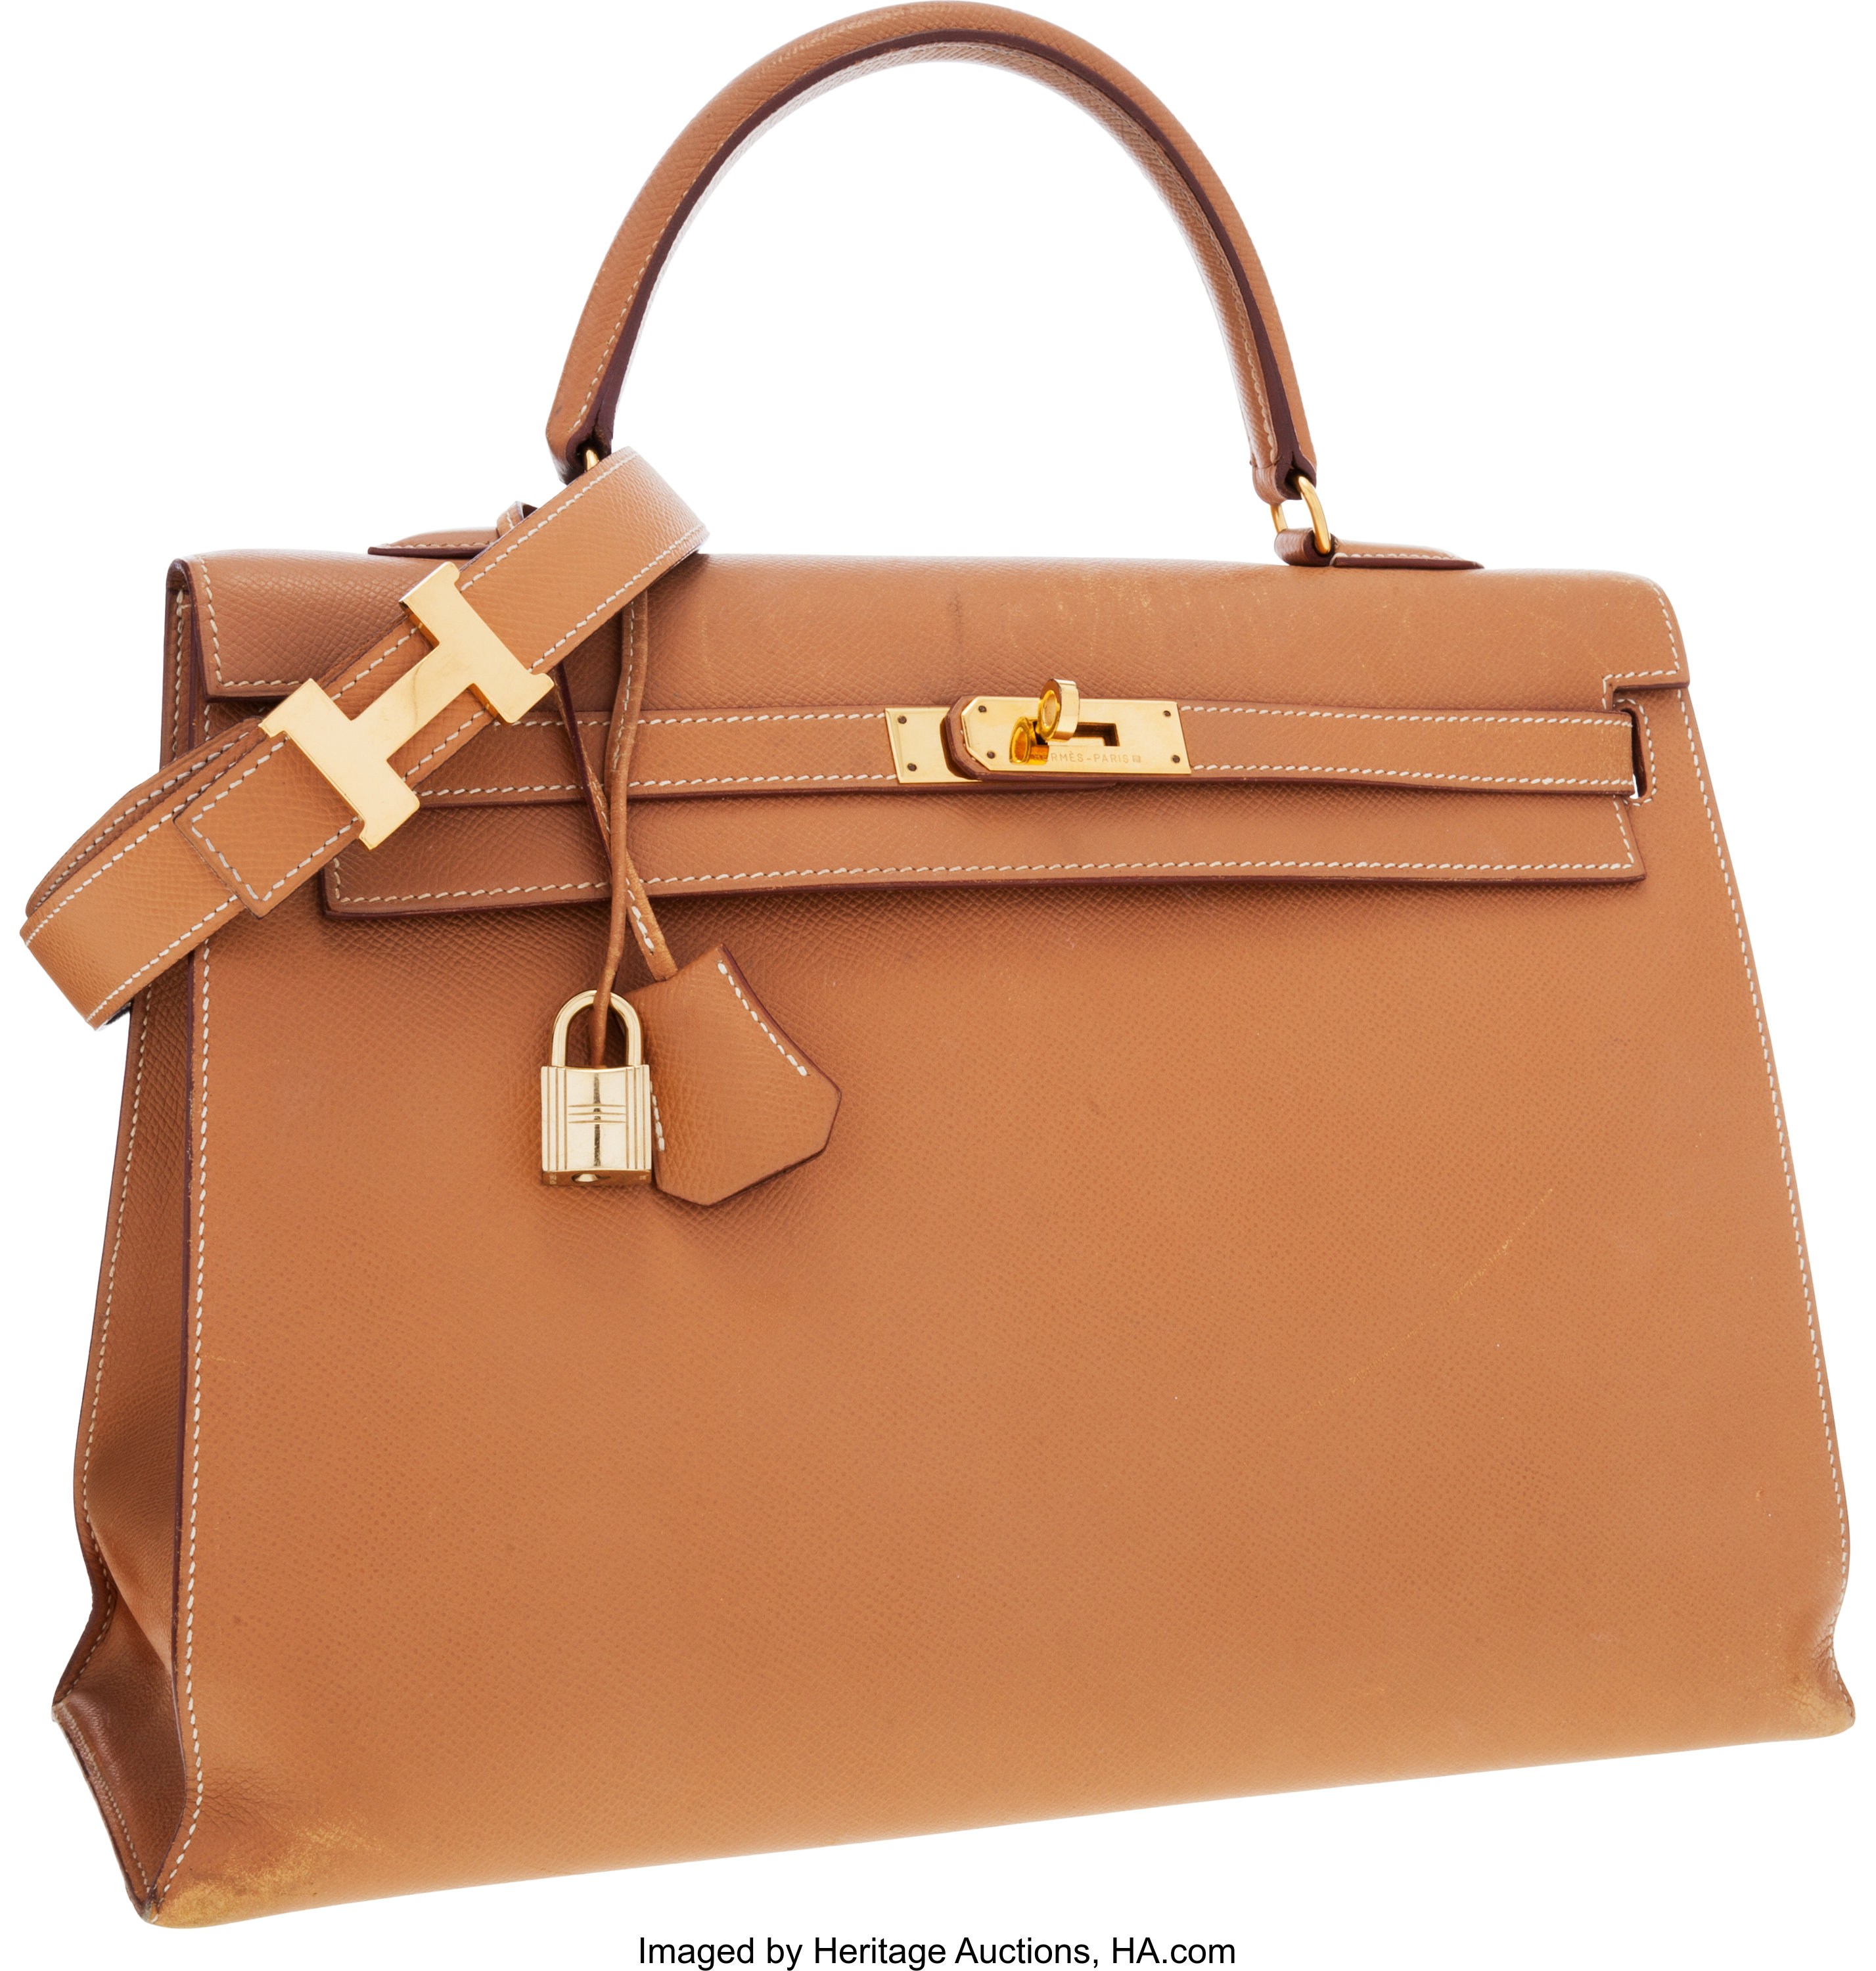 Sold at Auction: Hermes JIGE ELAN 29 Clutch Pink Suede & Leather Bag - H  Logo